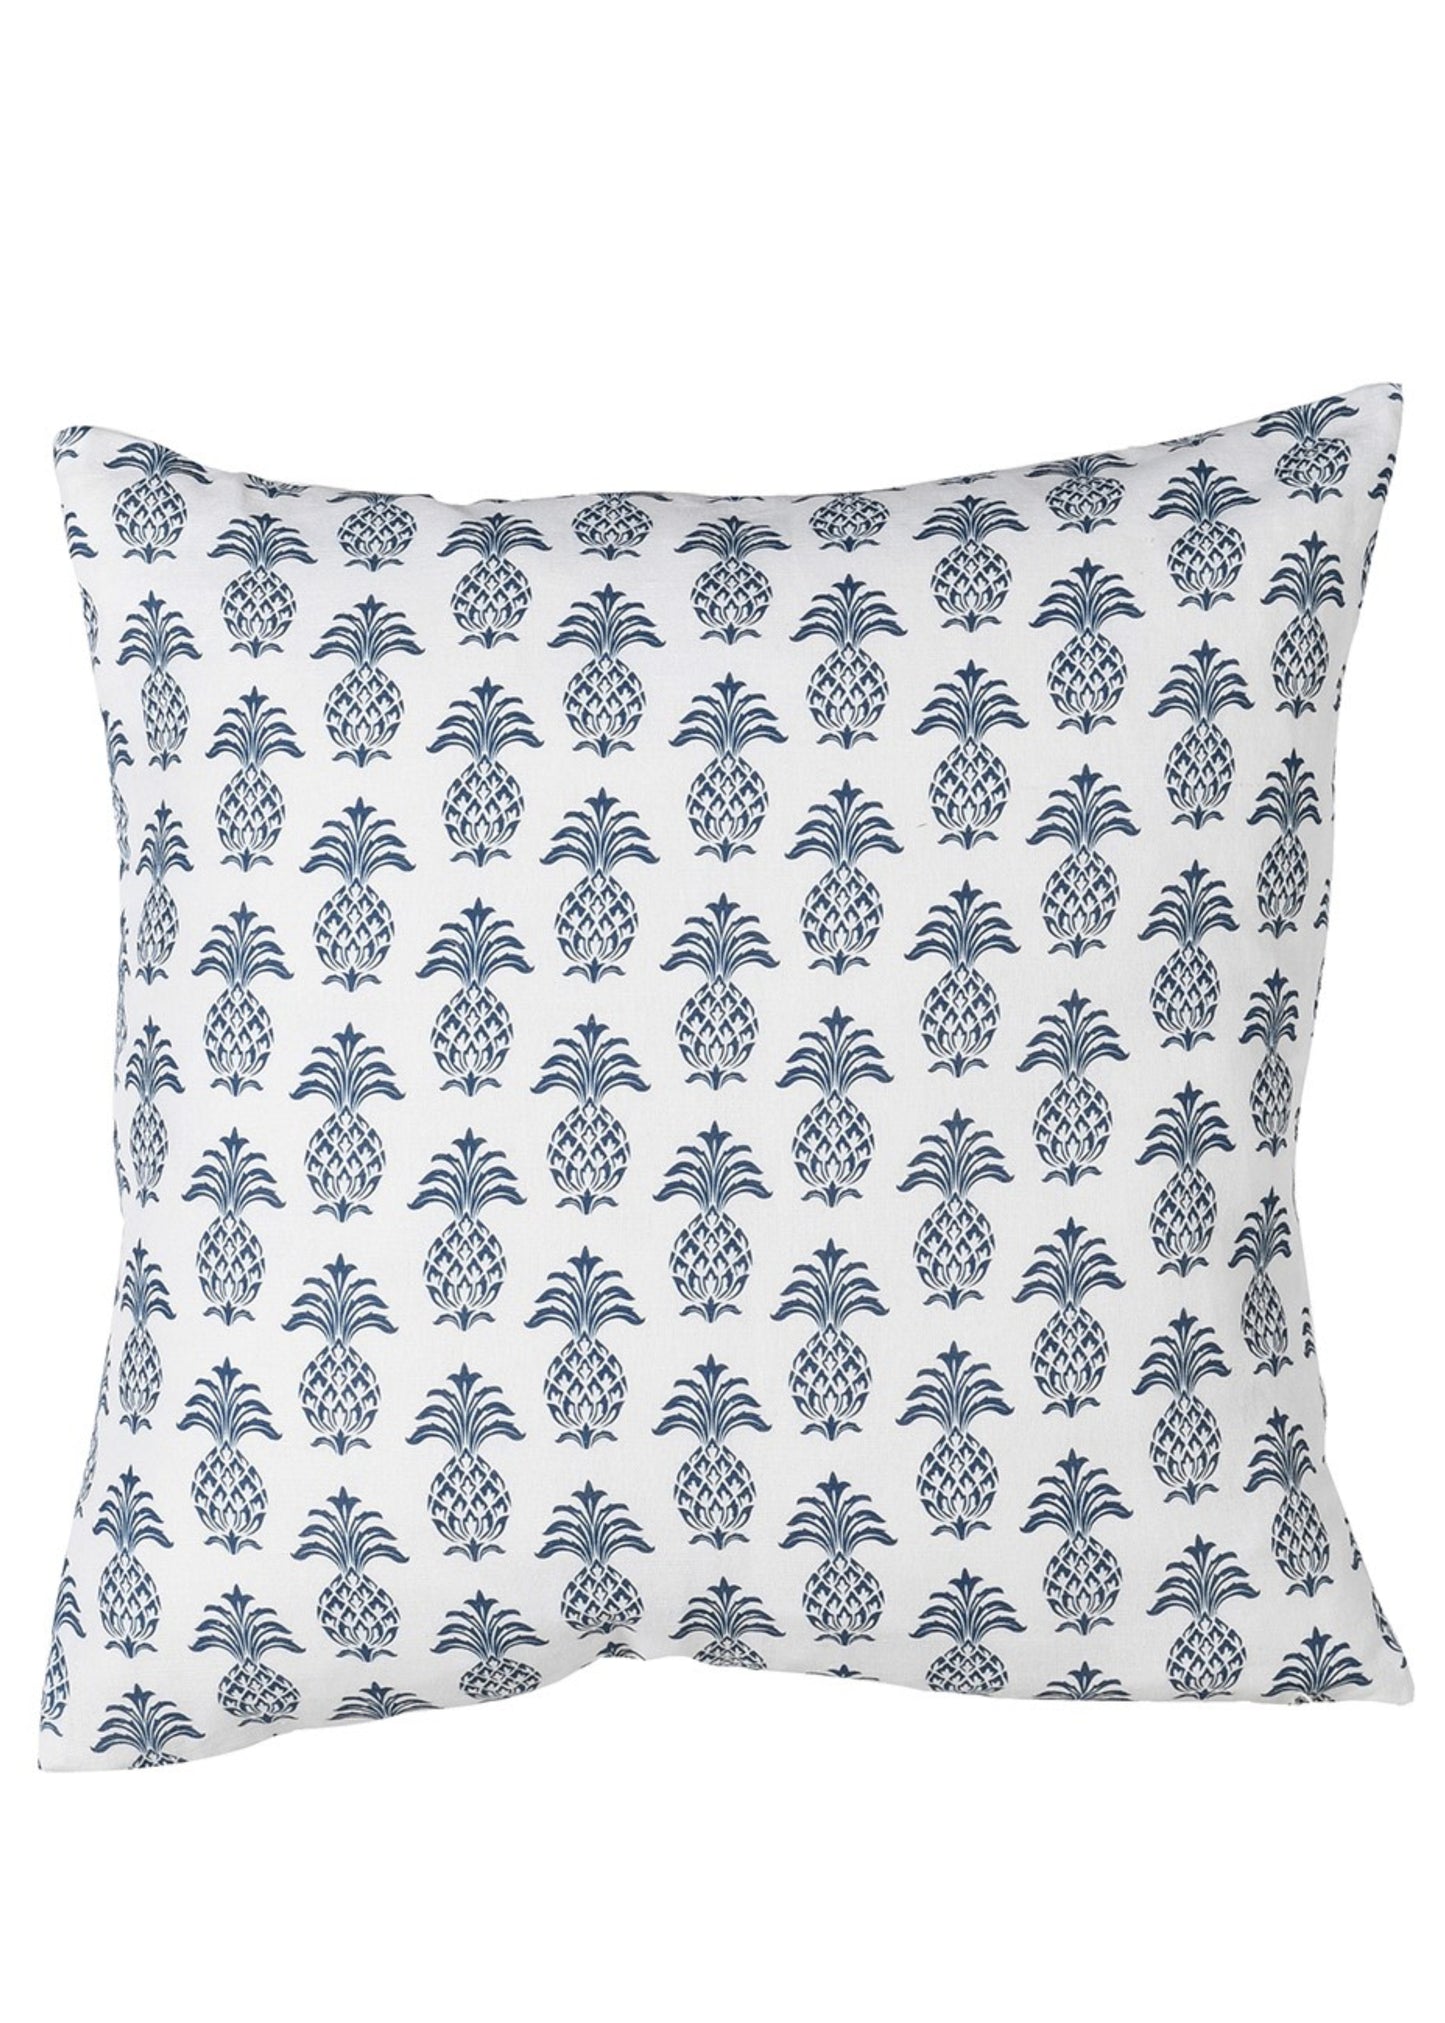 Pineapple design cushion cover